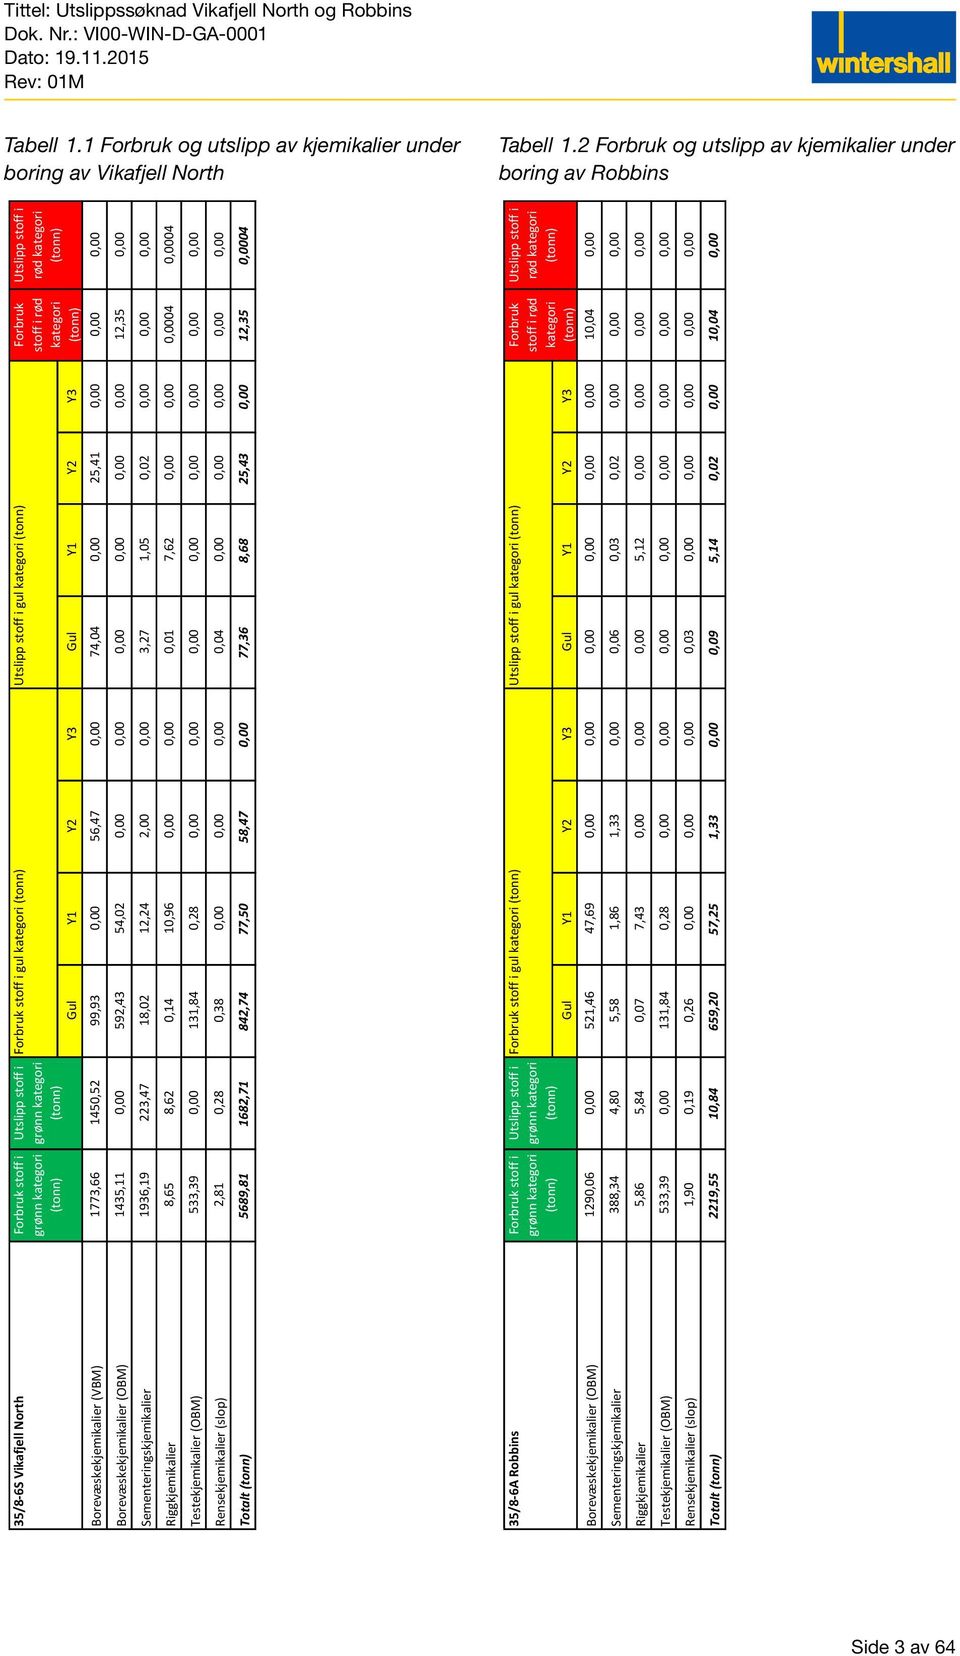 Utslipp stoff i gul kategori (tonn) Forbruk stoff i rød kategori Gul Y1 Y2 Y3 Gul Y1 Y2 Y3 Borevæskekjemikalier (VBM) 1773,66 1450,52 99,93 0,00 56,47 0,00 74,04 0,00 25,41 0,00 0,00 0,00 (tonn)